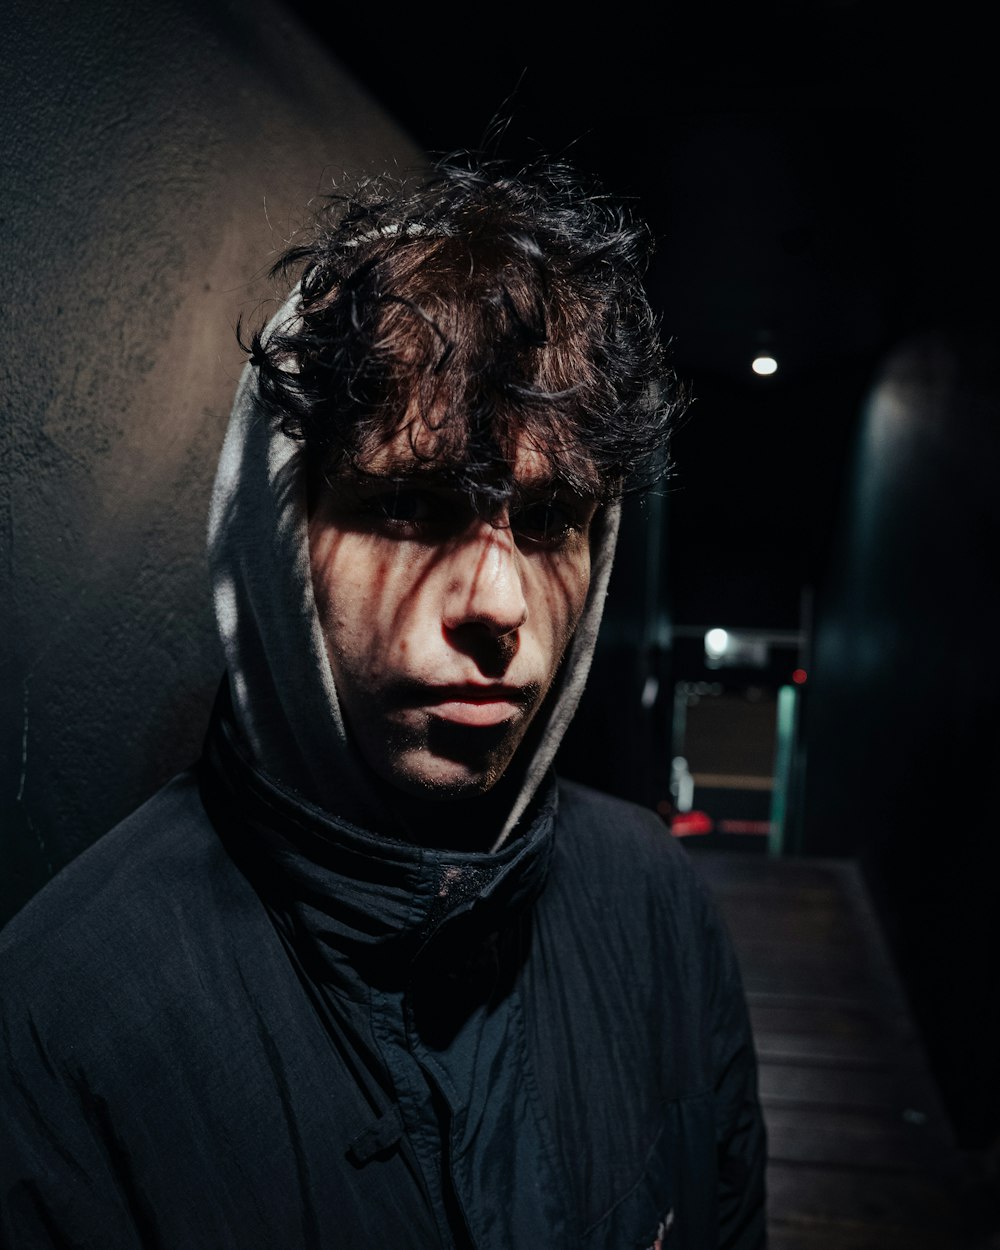 a man wearing a hoodie standing in a dark room